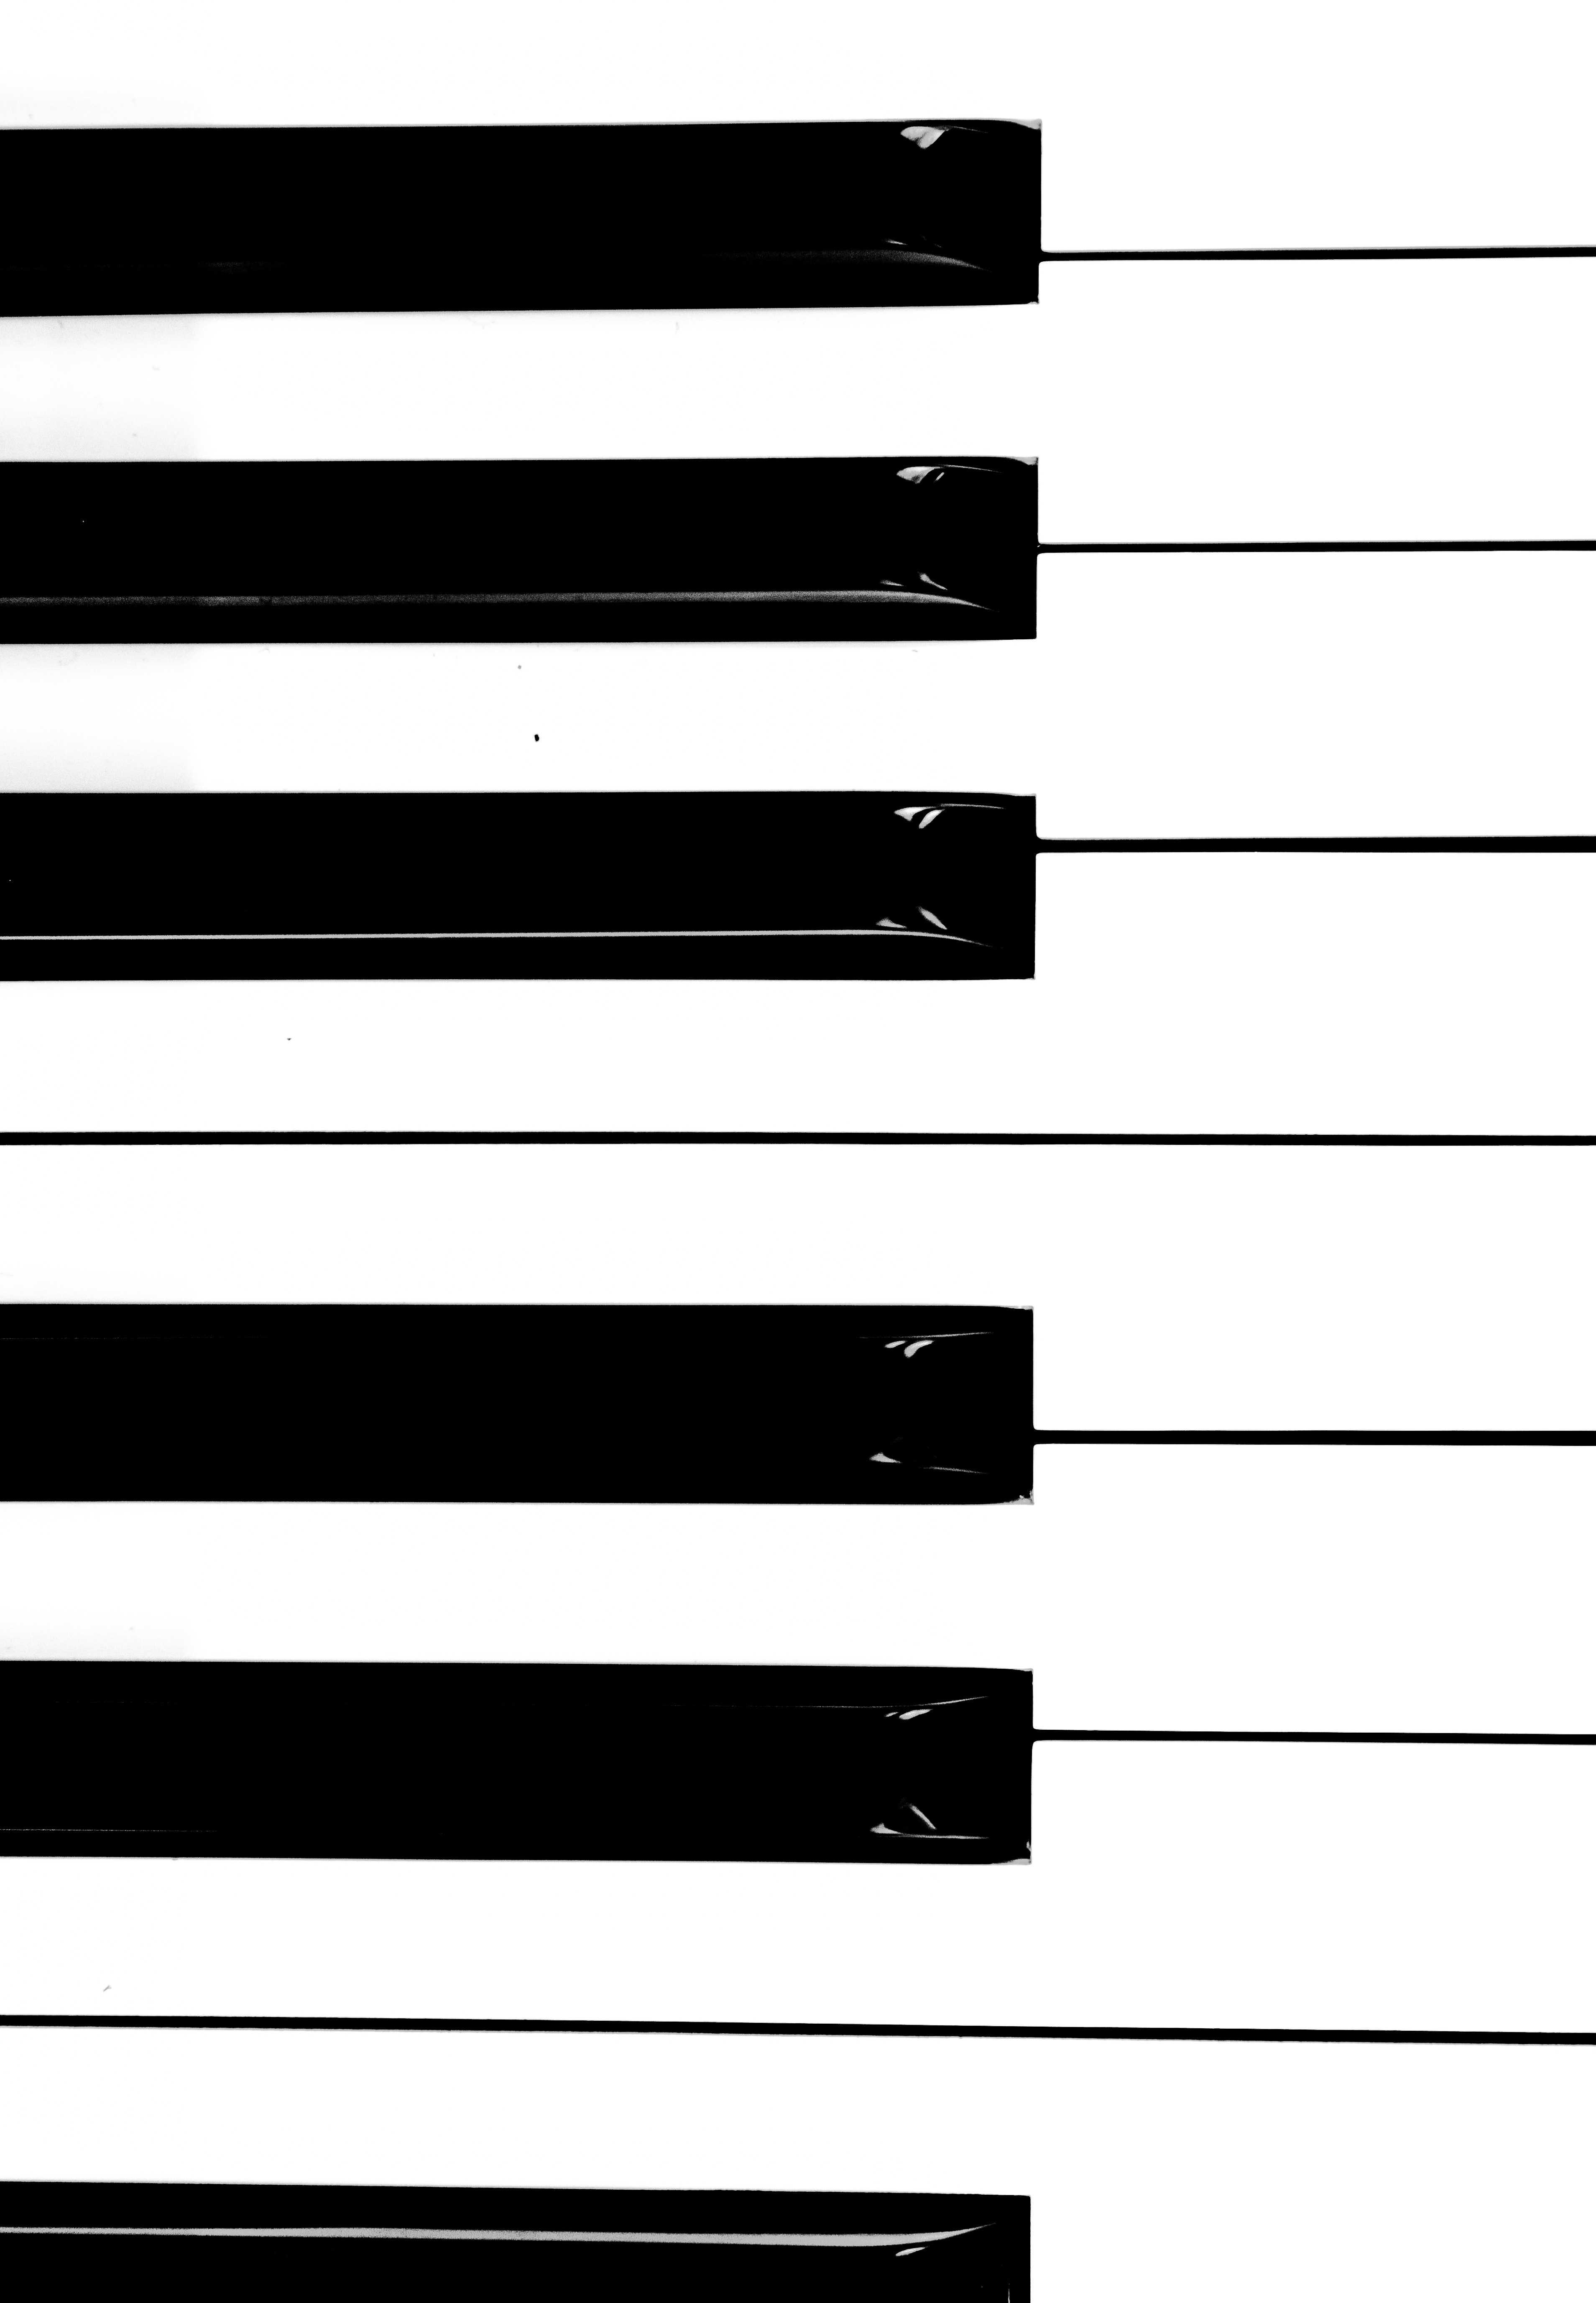 Piano musical instrument, minimalism, chb, music 4k Wallpaper